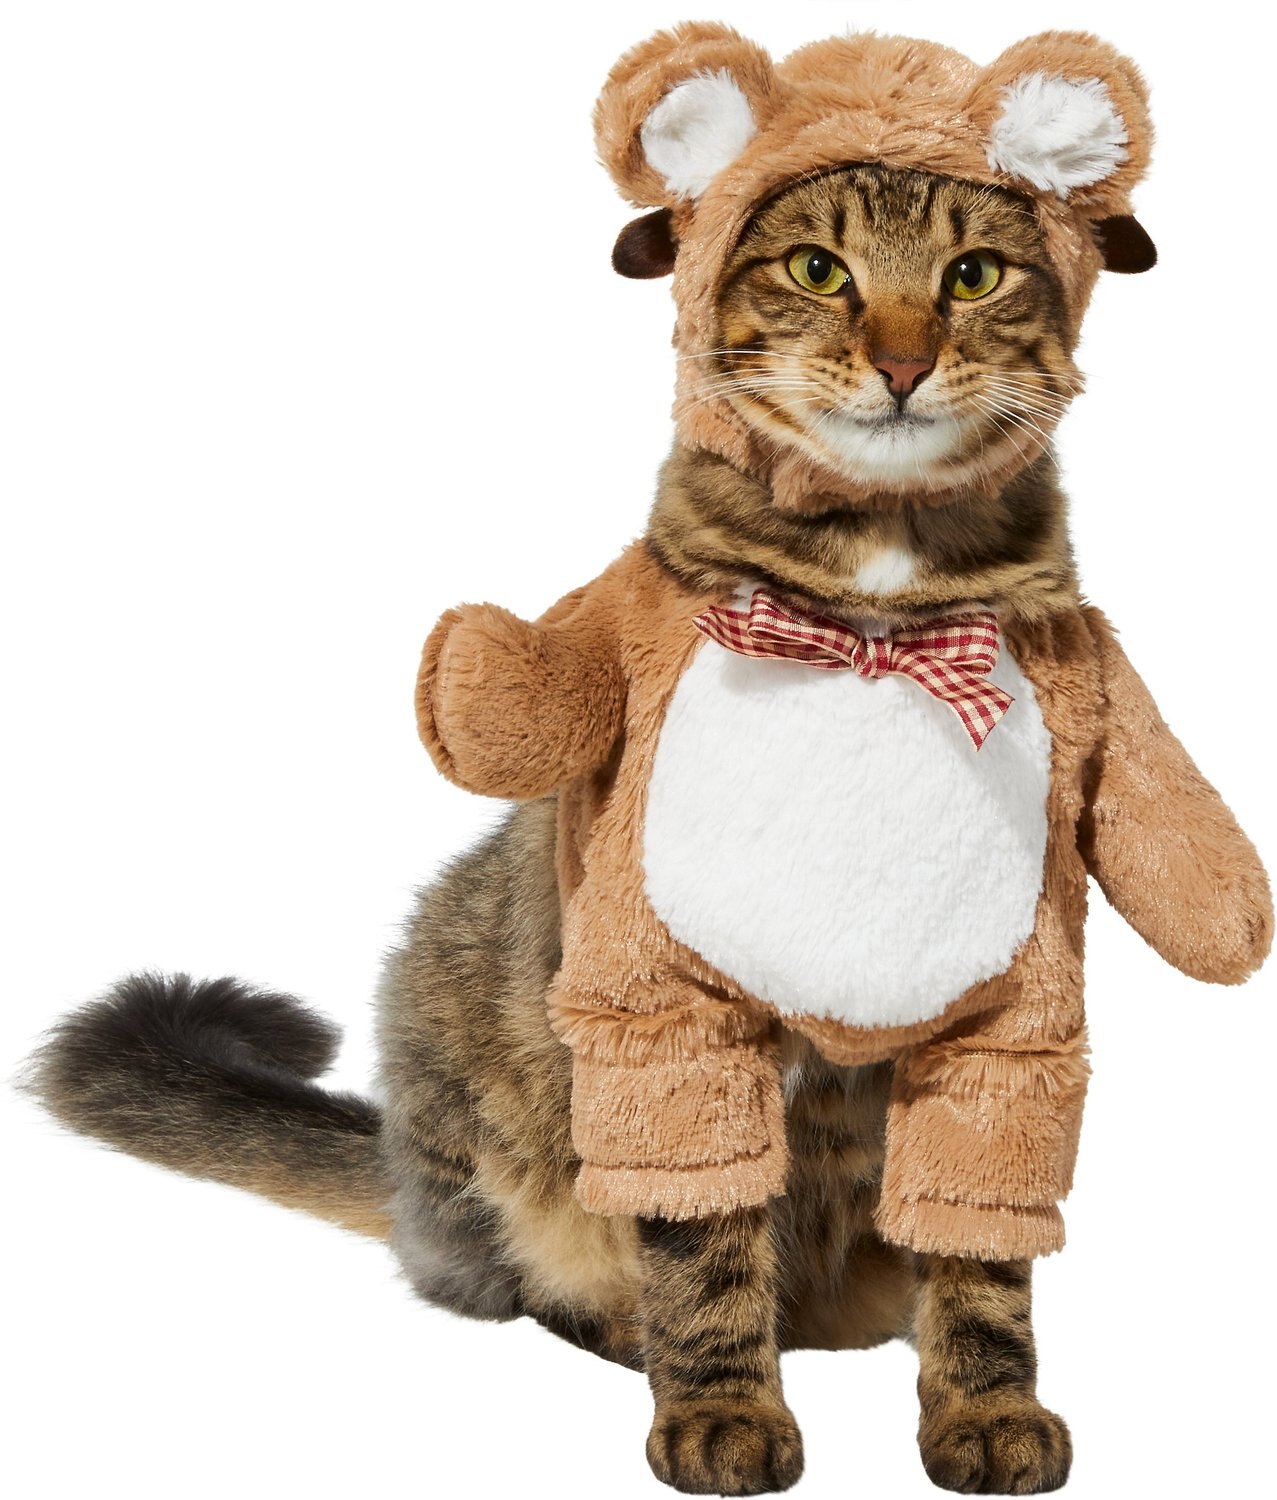 stuffed teddy bear costume